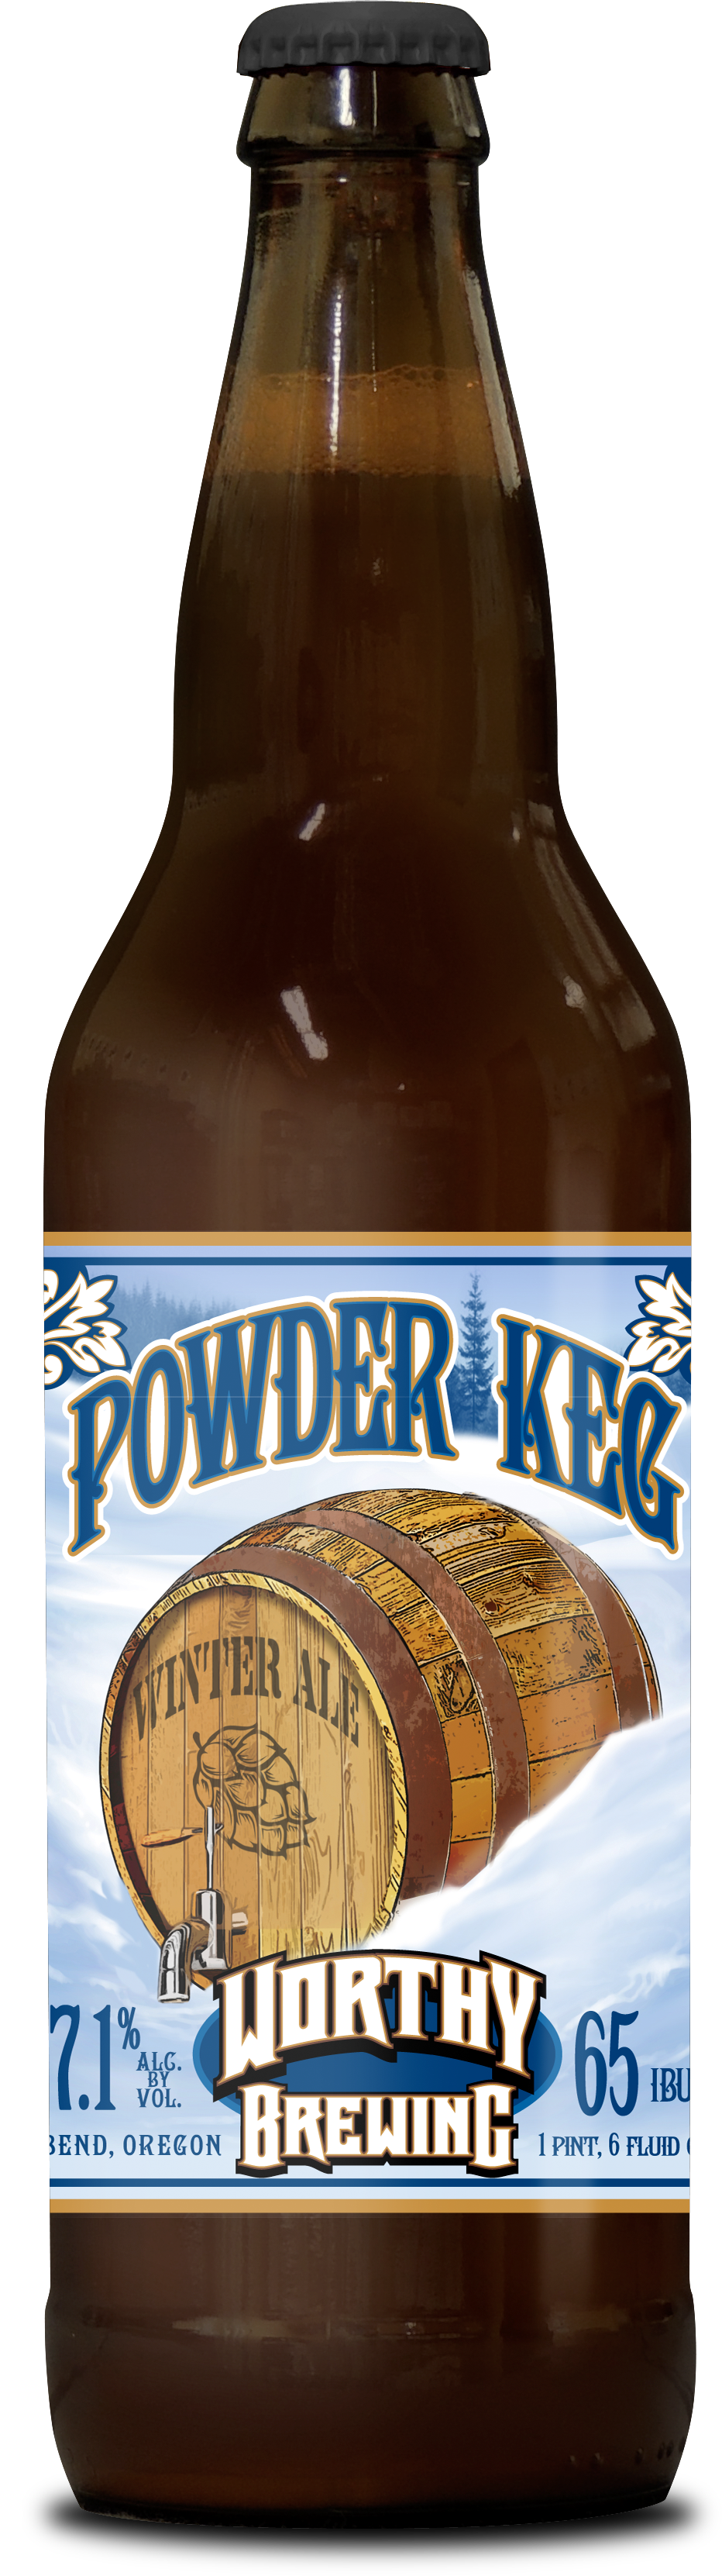 Worthy Brewing Releases Powder Keg Winter Ale - Beer Bottle (932x3323), Png Download